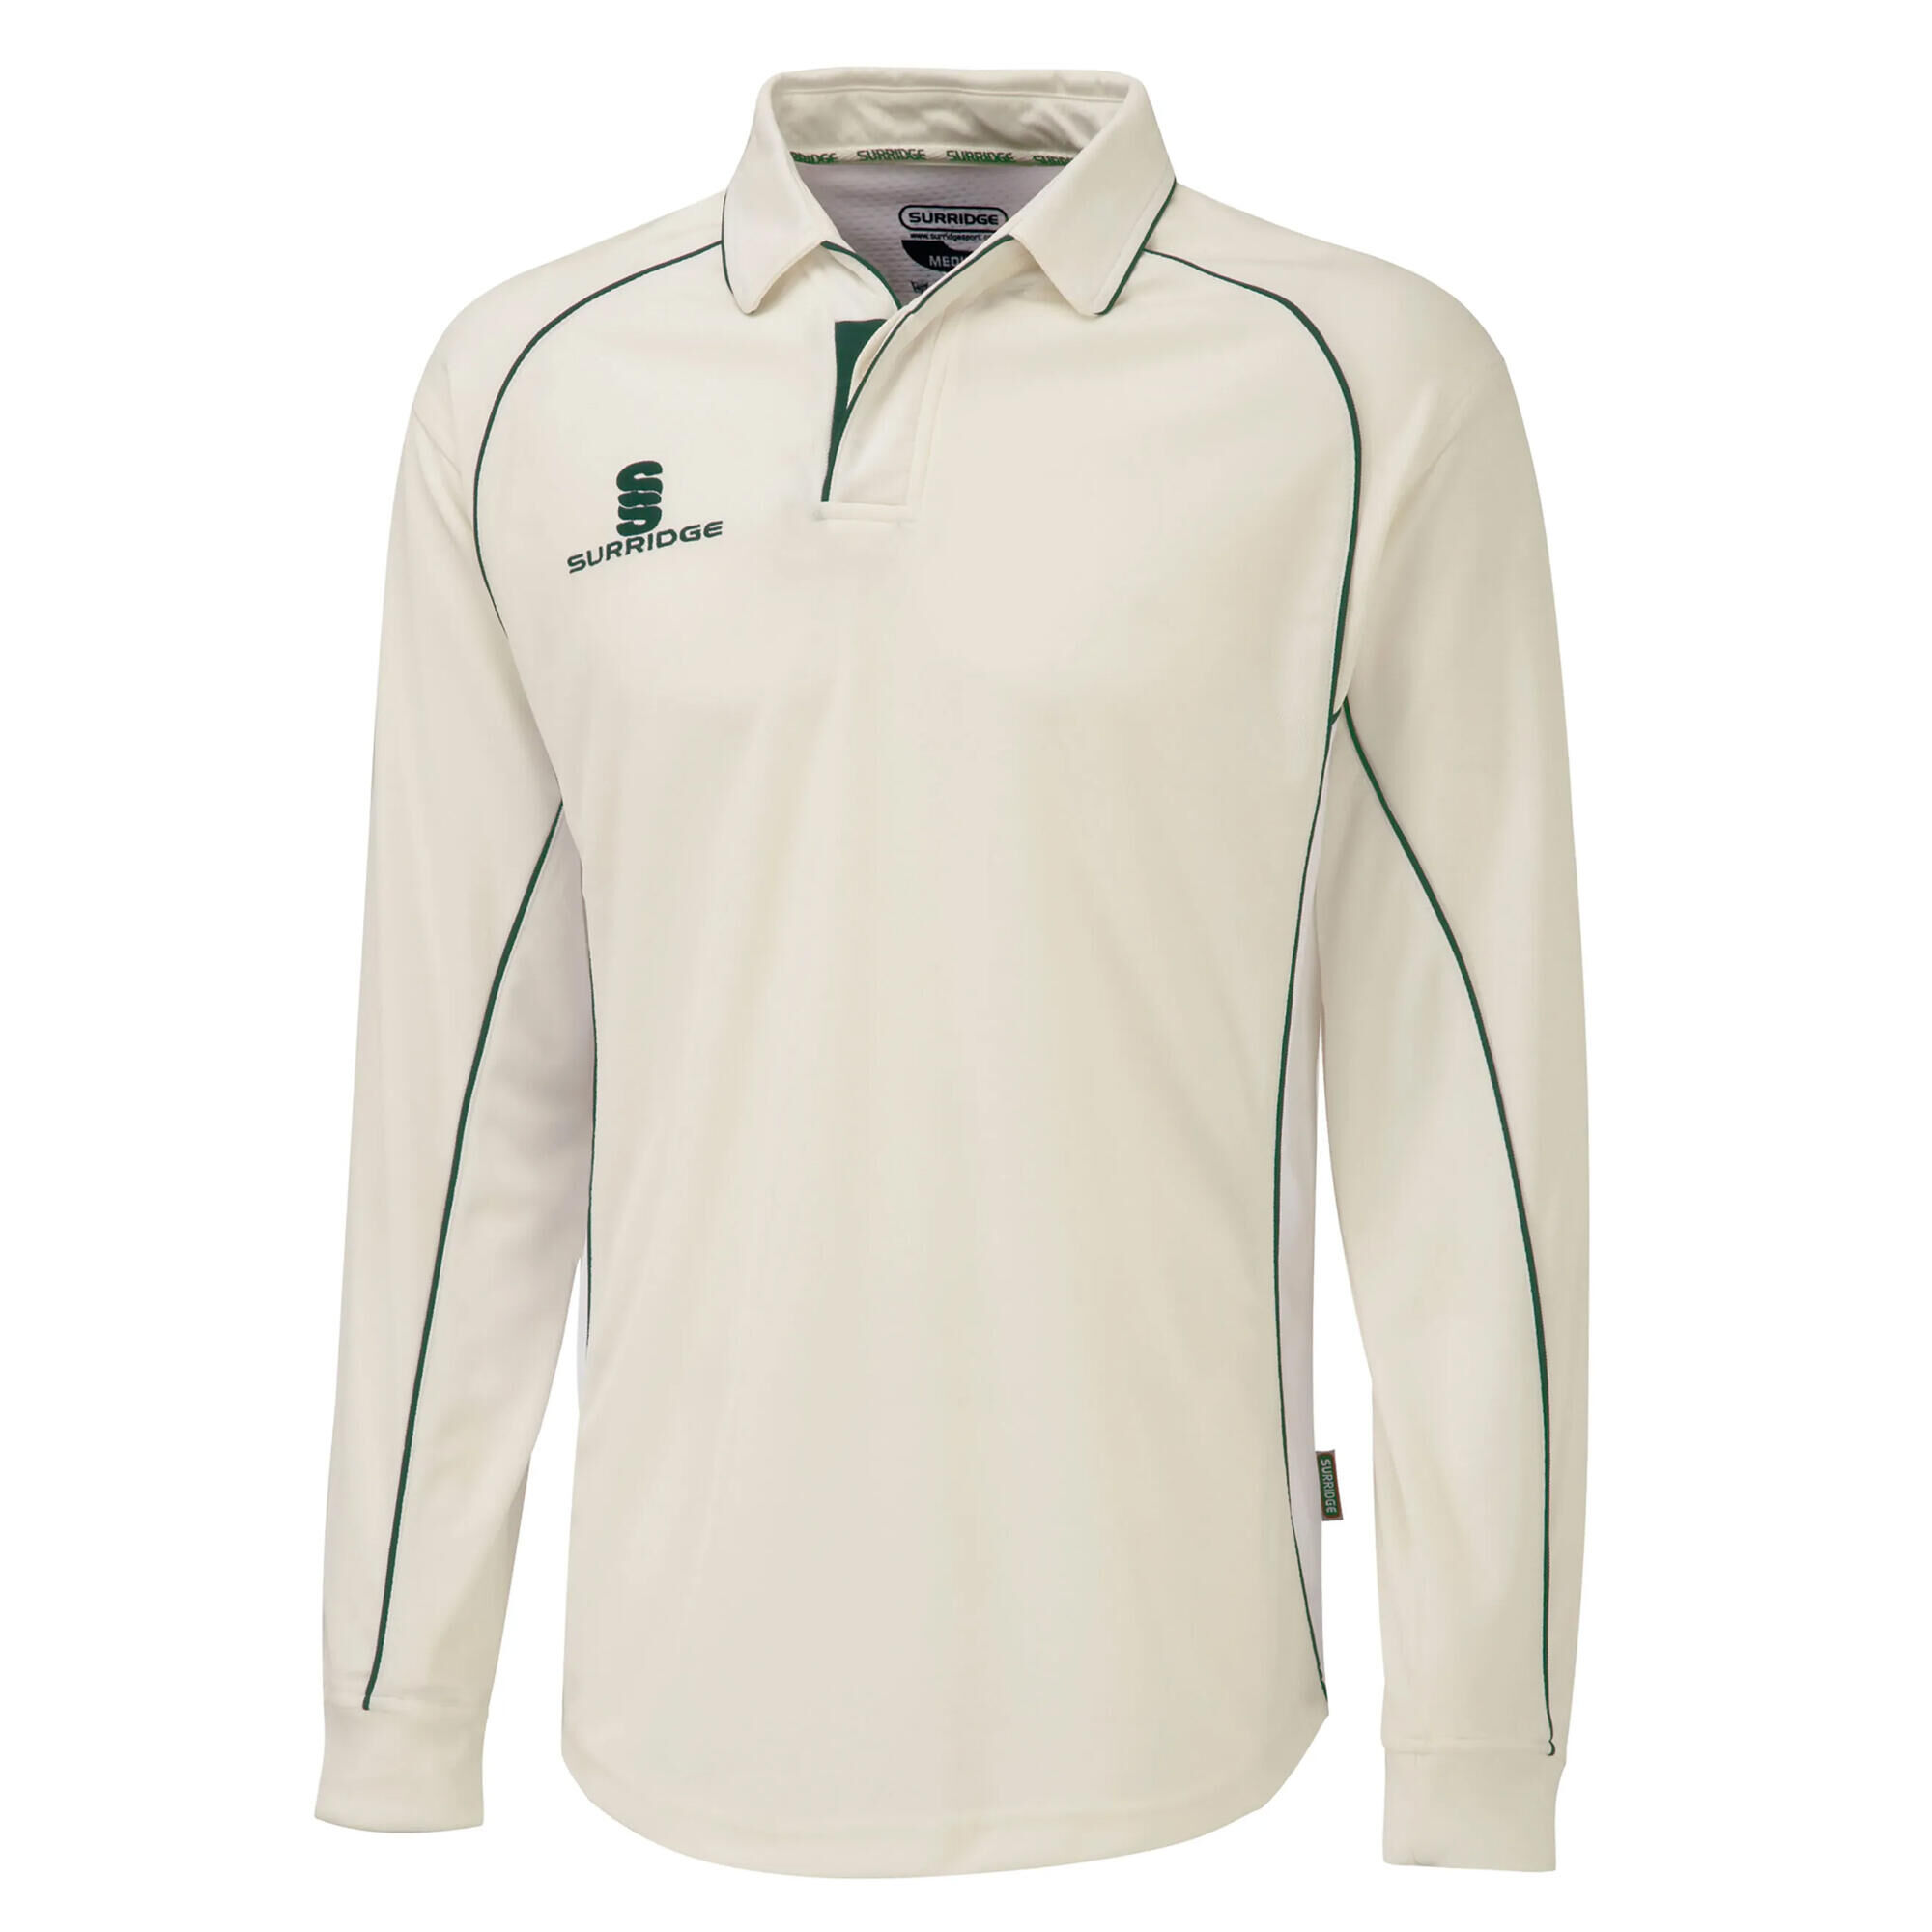 SURRIDGE Mens/Youth Premier Sports Long Sleeve Polo Shirt (Cream/Green)